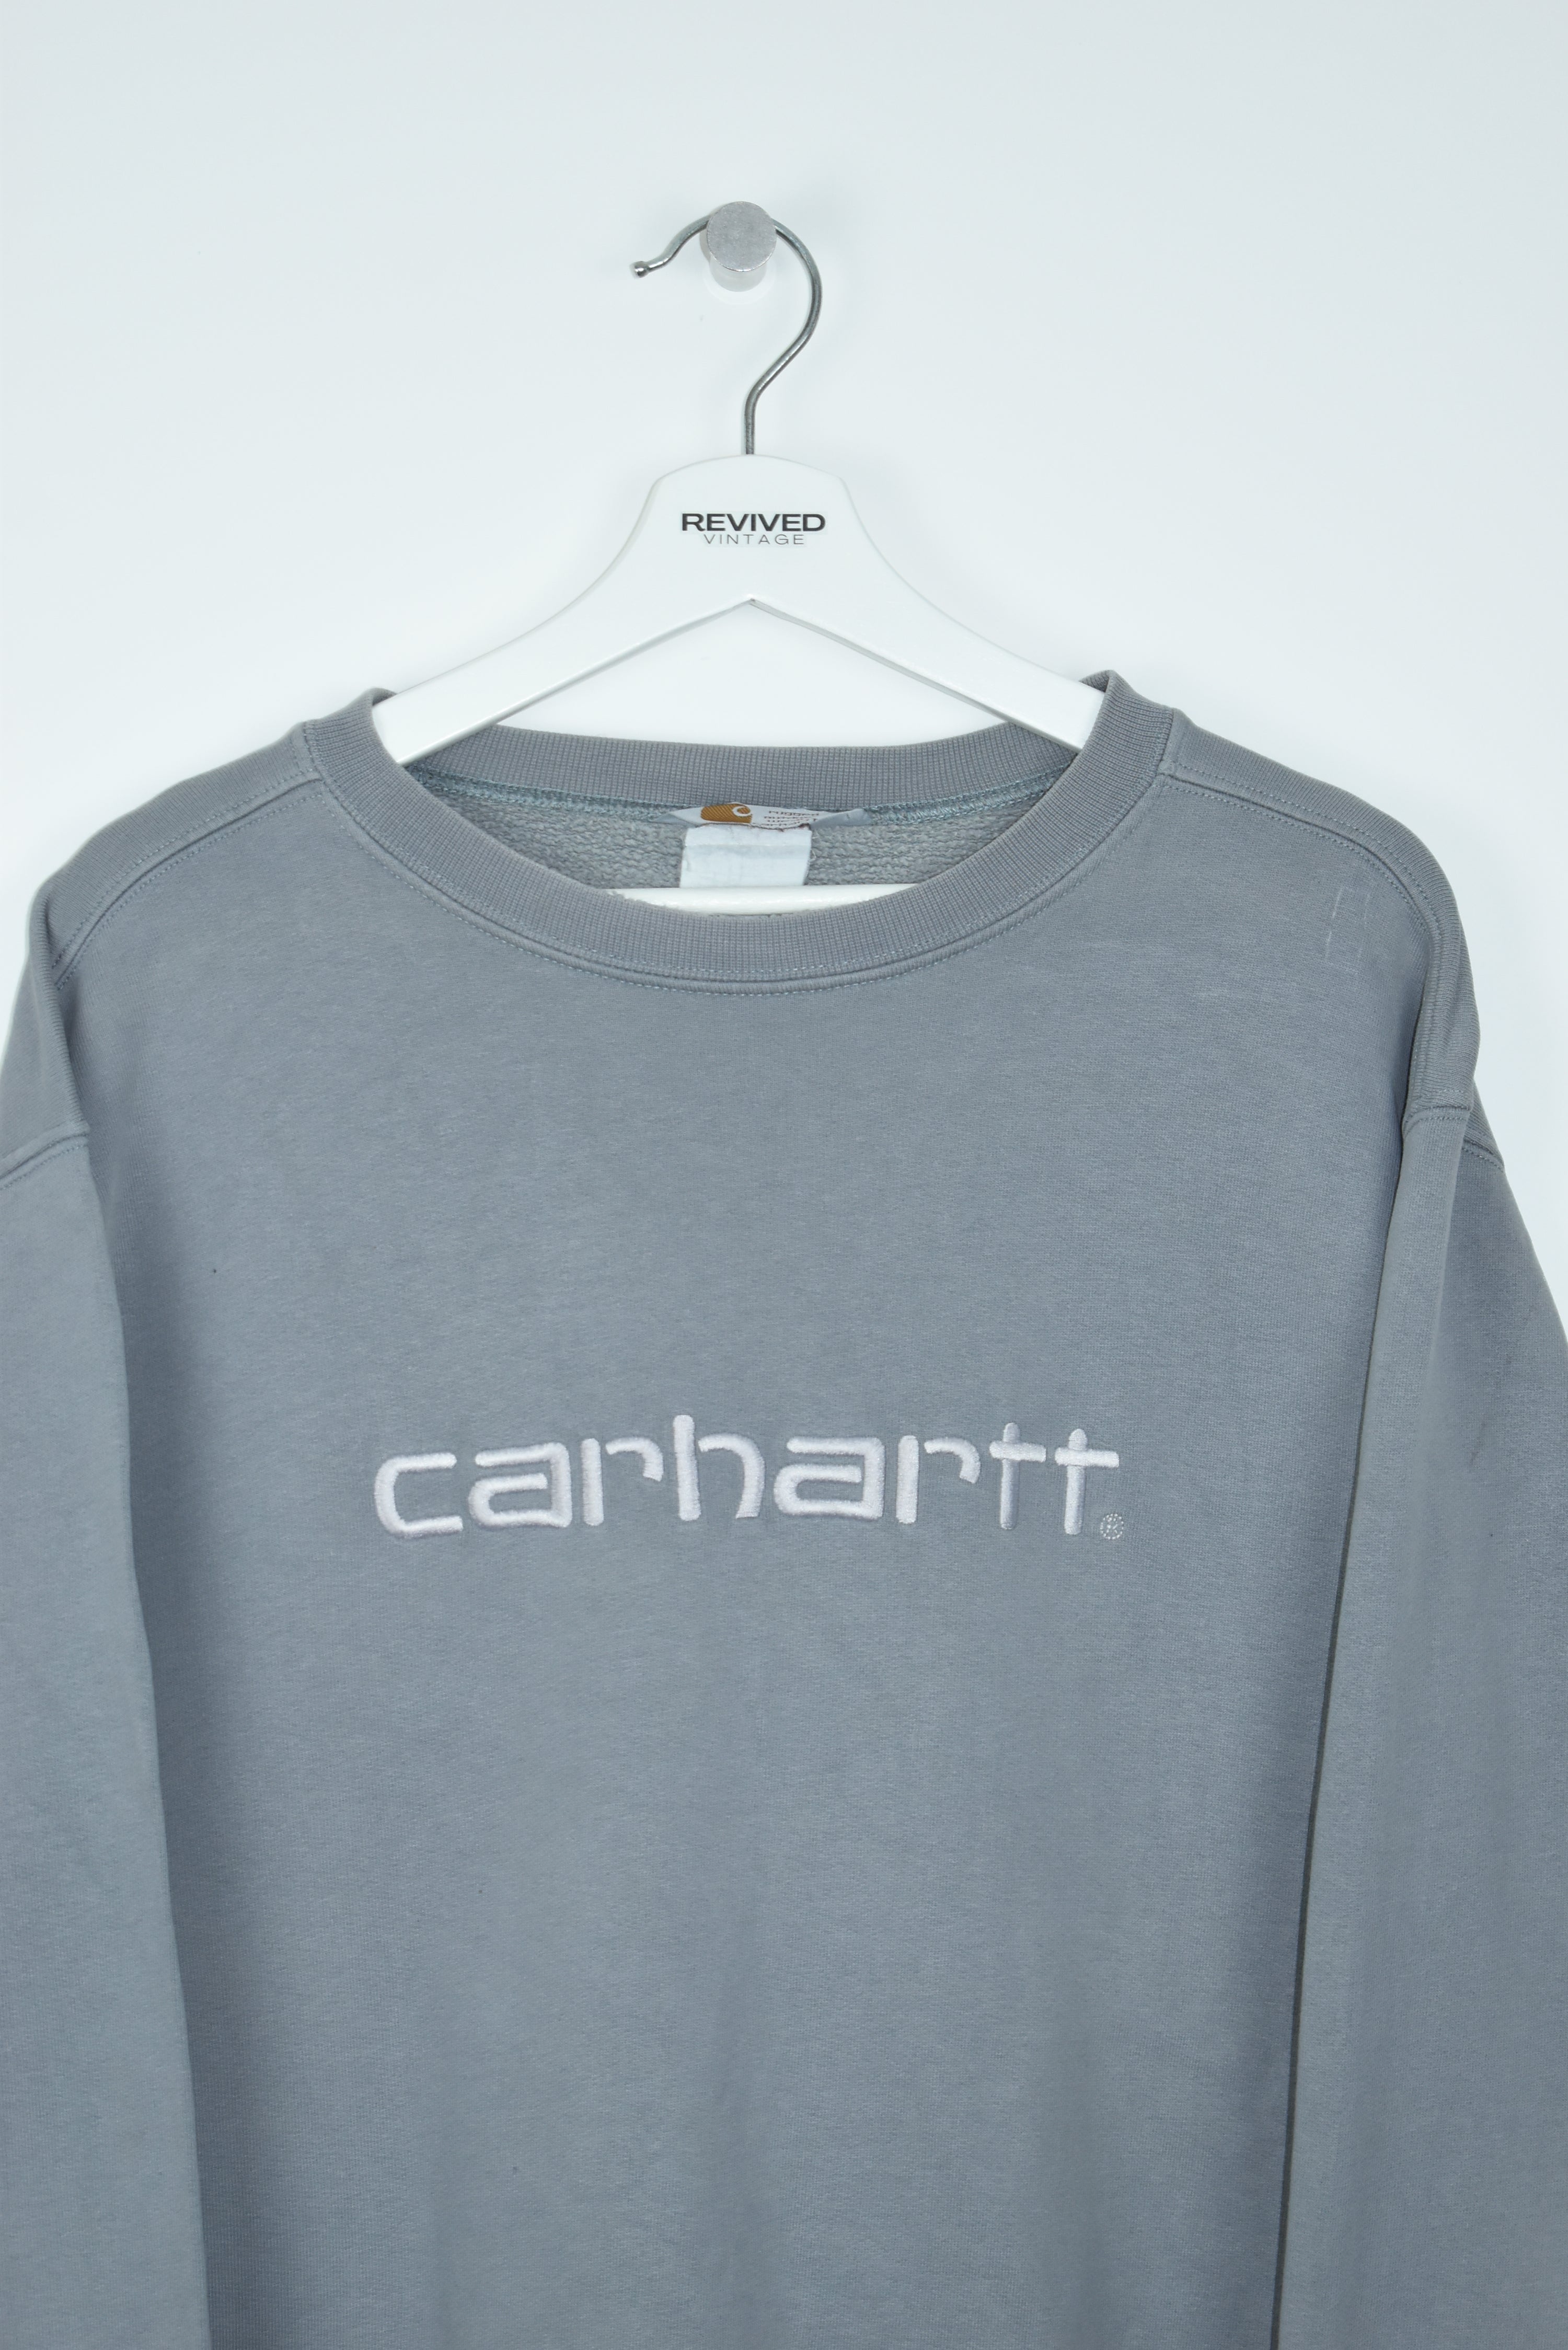 Vintage Carhartt Embroidery Logo Sweatshirt Large